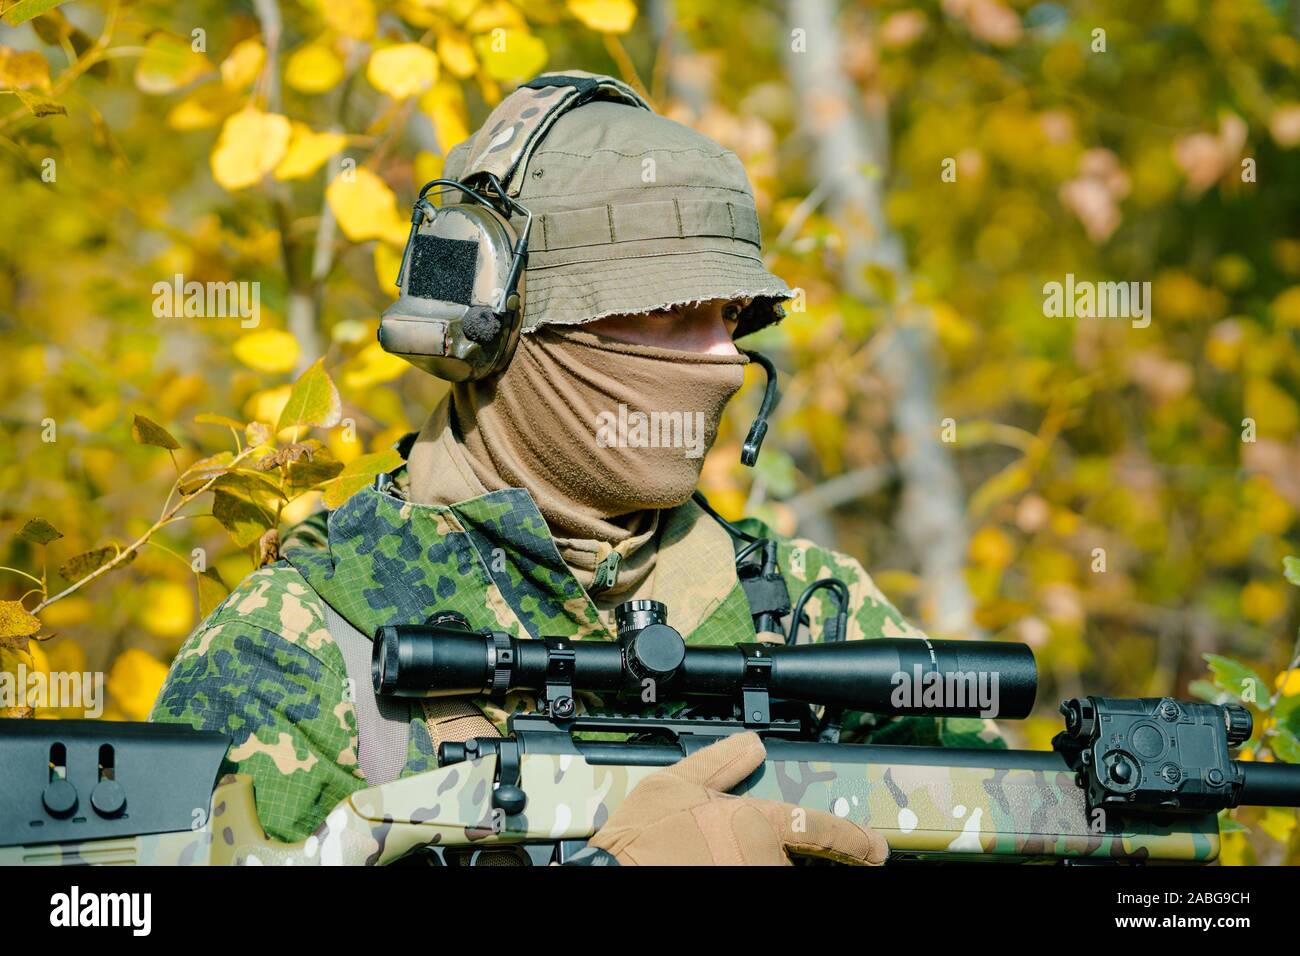 Airsoft strikeball sniper rifle Stock Photo by ©danissimo_photo 170722618